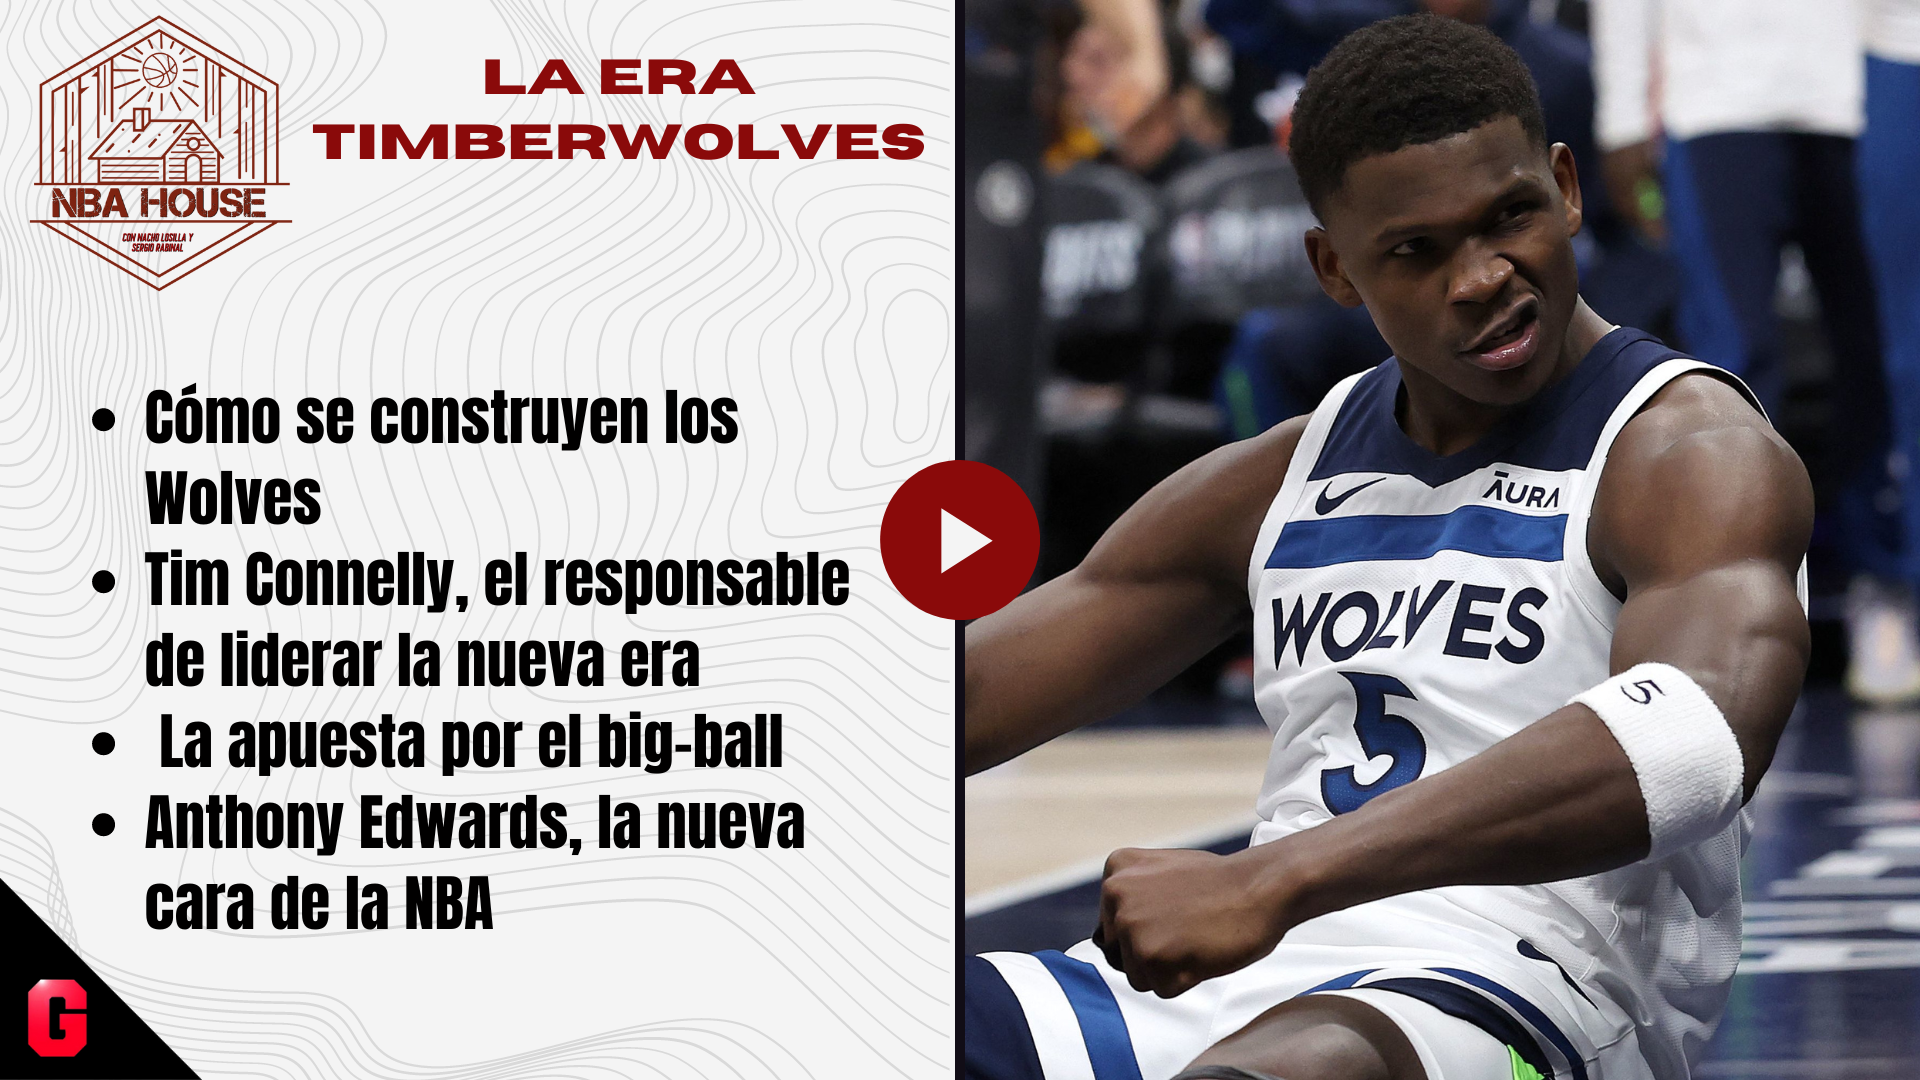 NBA House Timberwolves